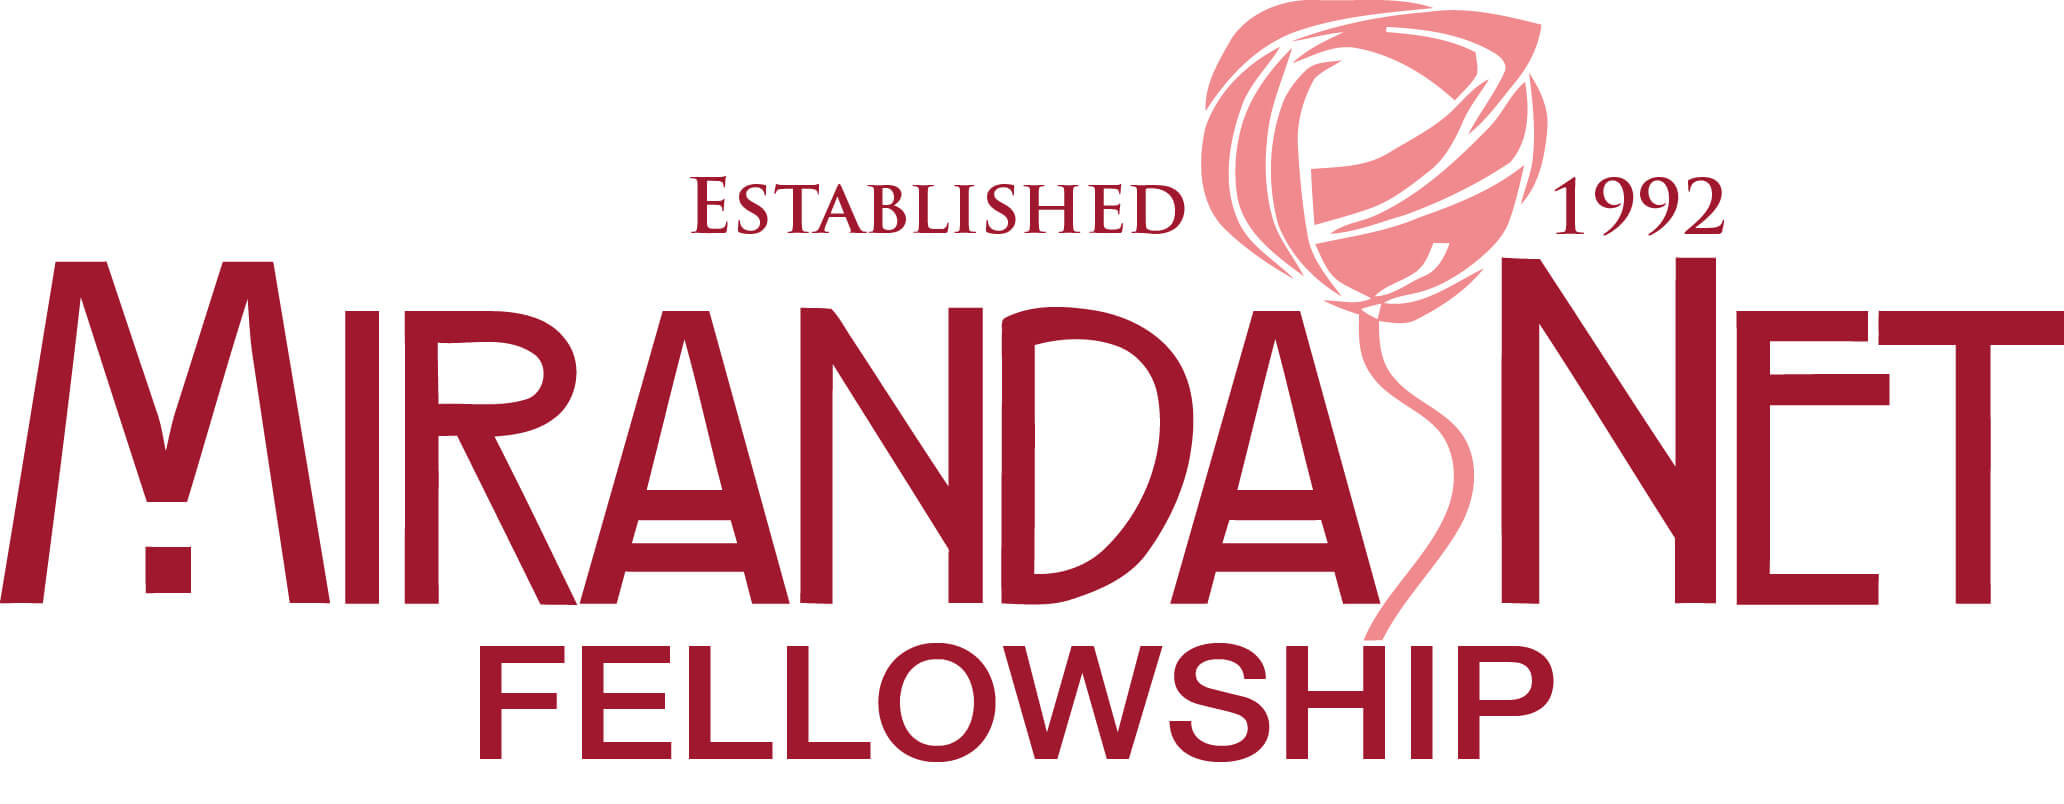 MirandaNet Fellowship